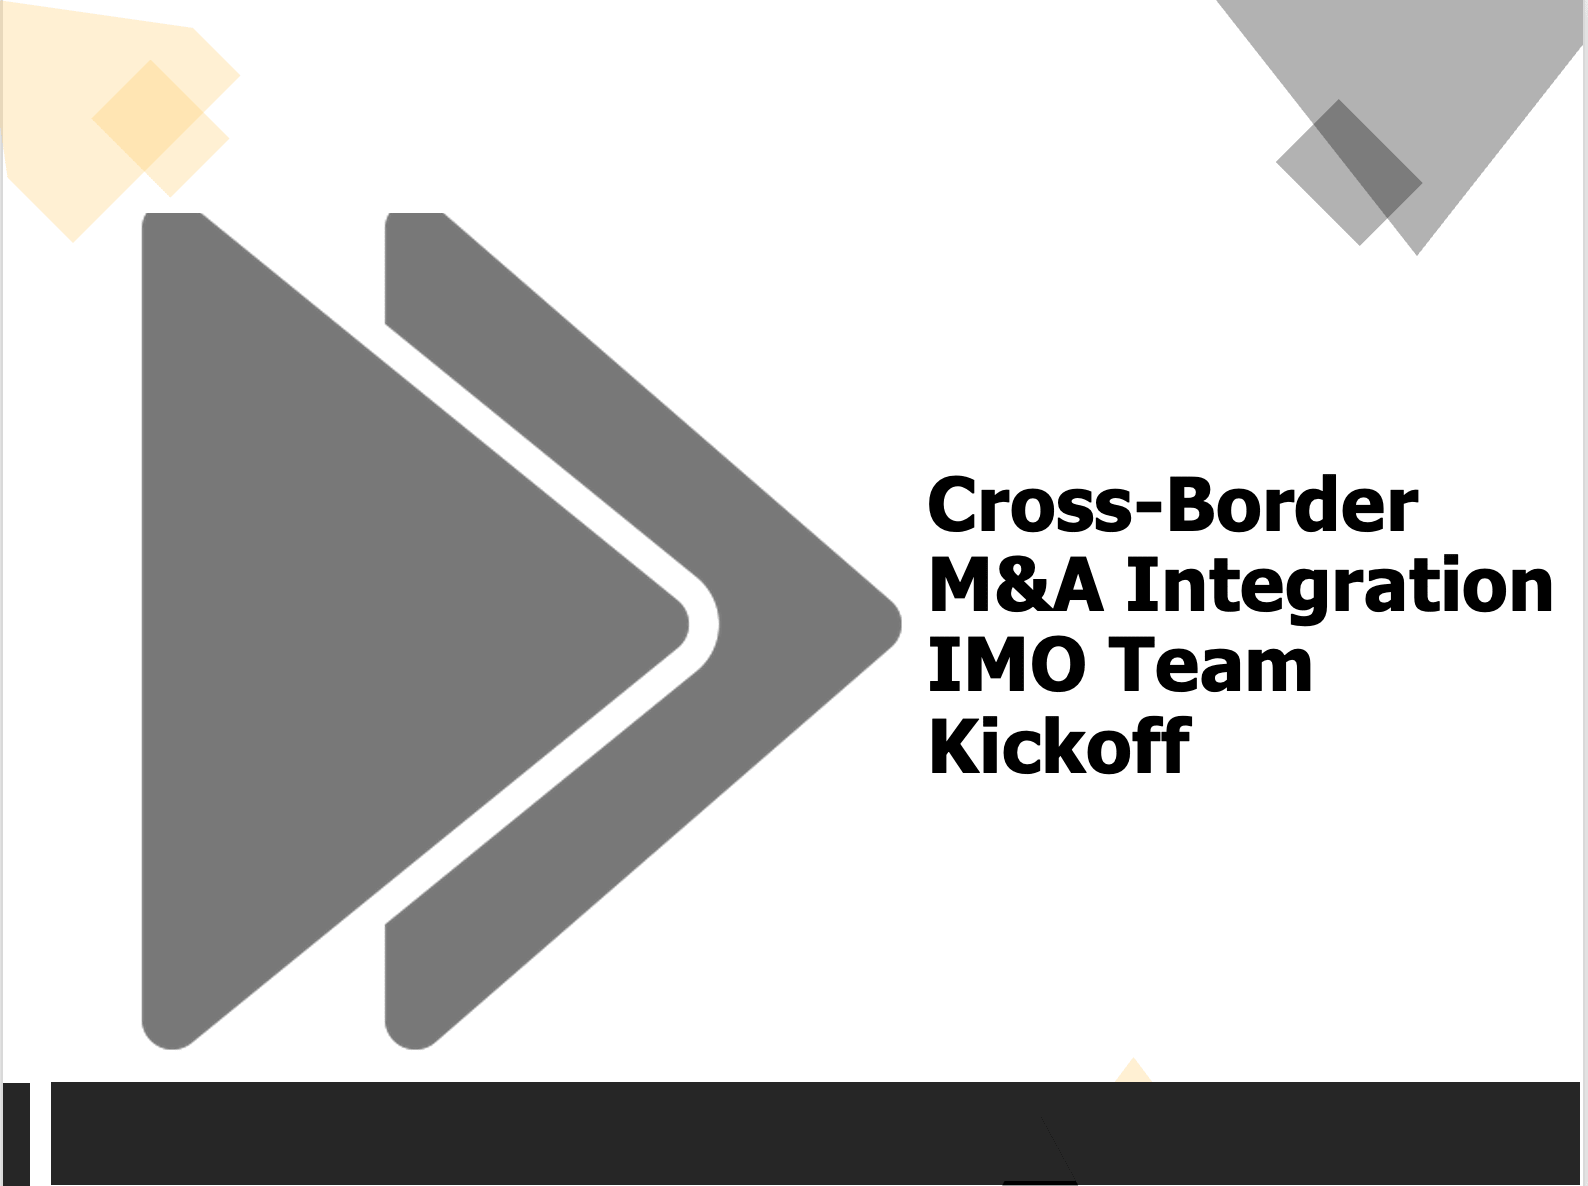 Cross-Border M&A Integration IMO Team Kickoff